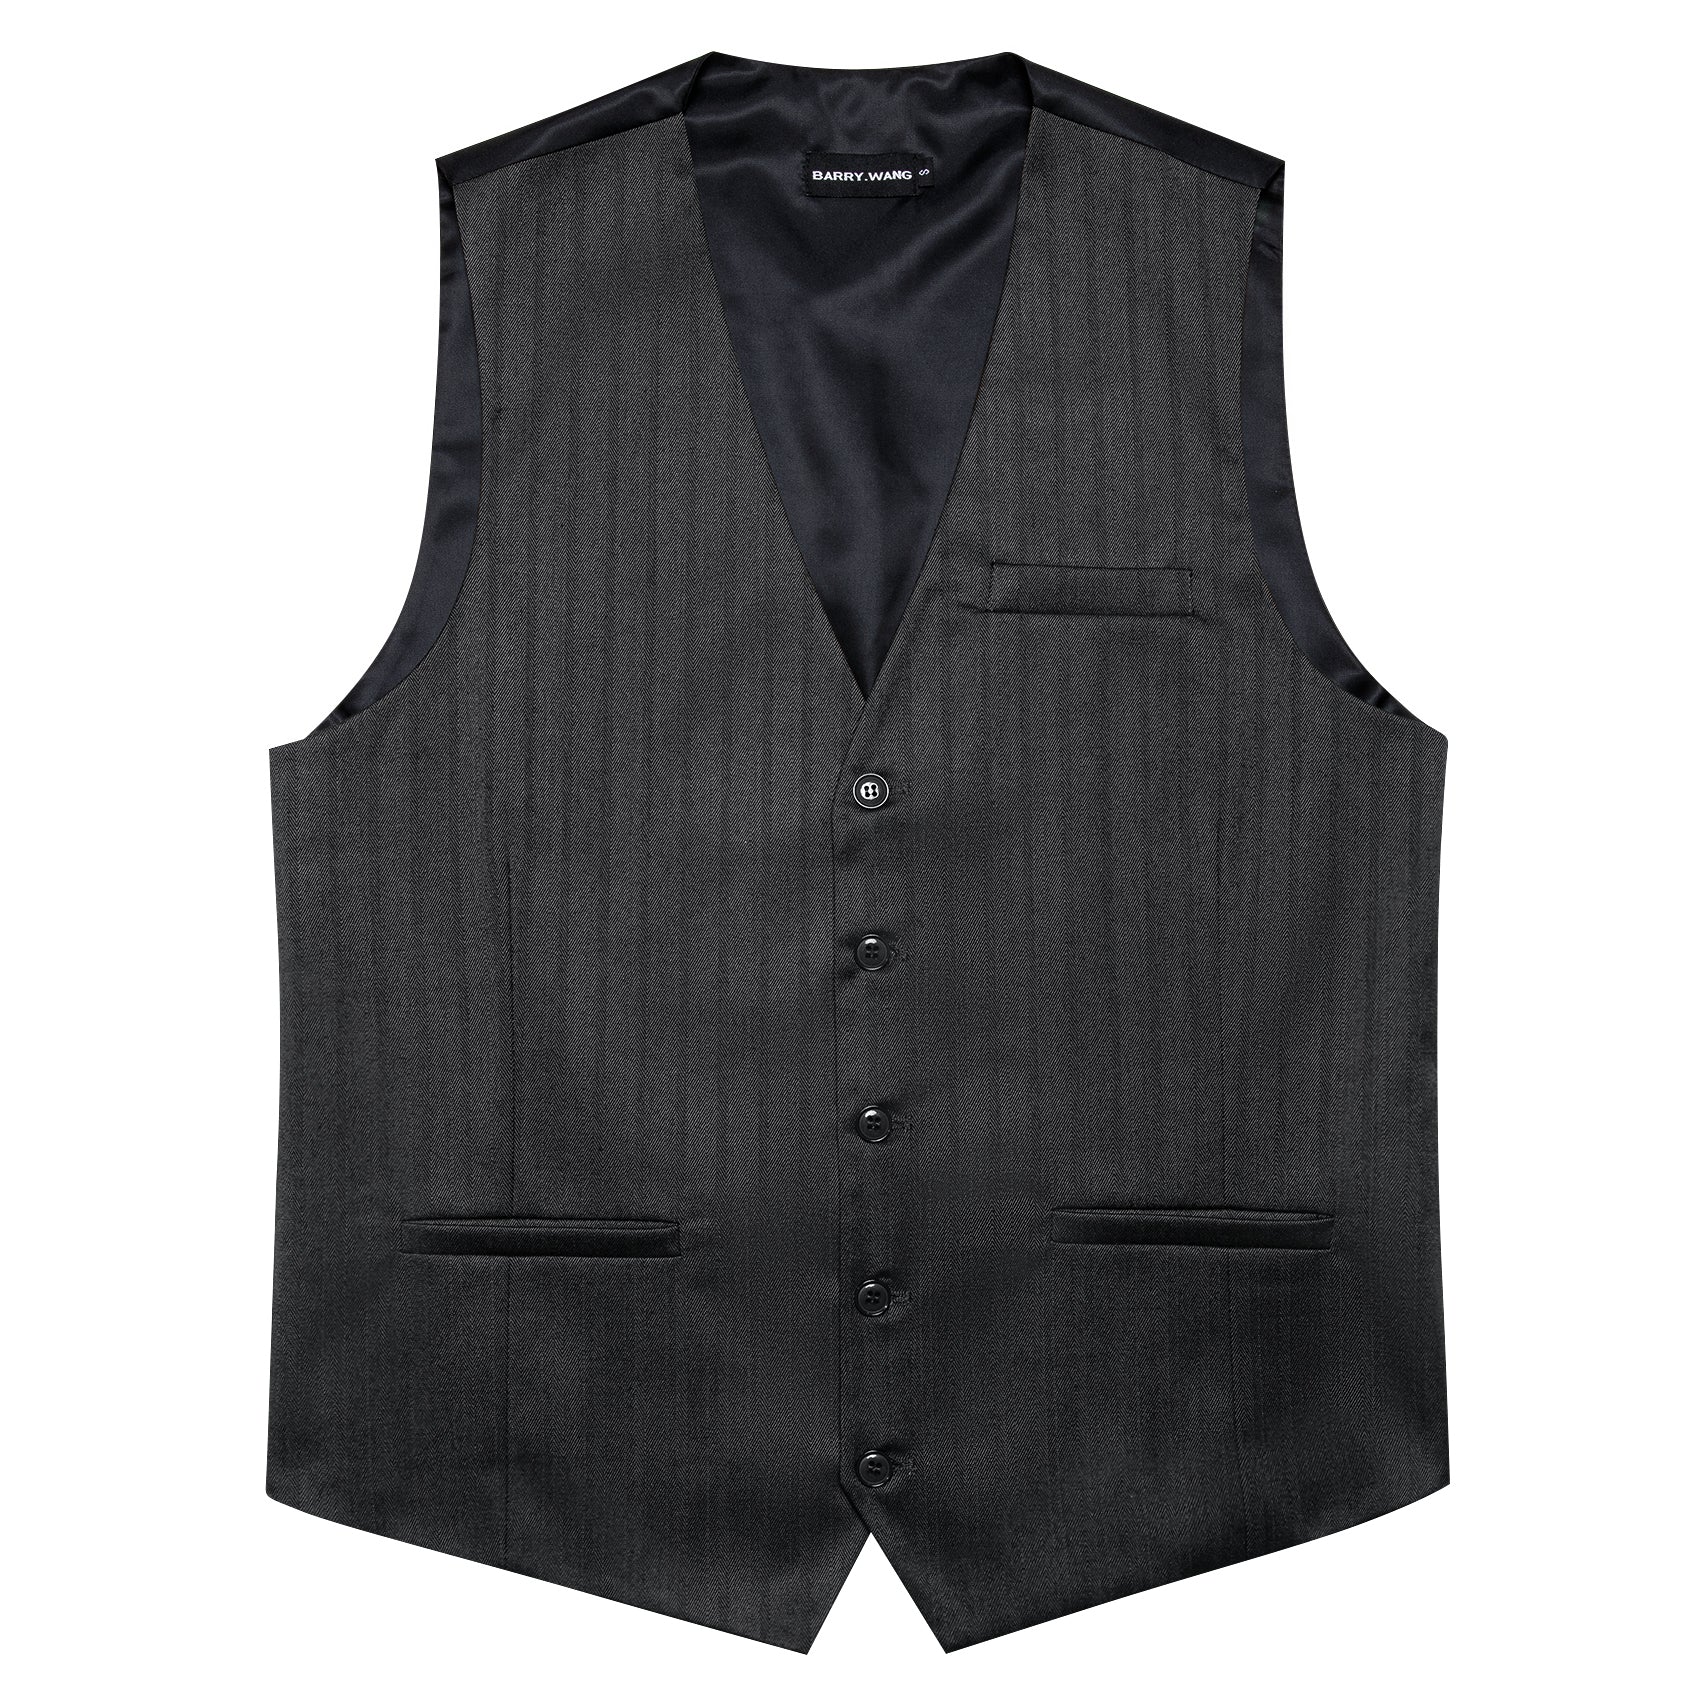 Barry.wang Men's Work Vest Classy Black Solid Vest Waistcoat Suit